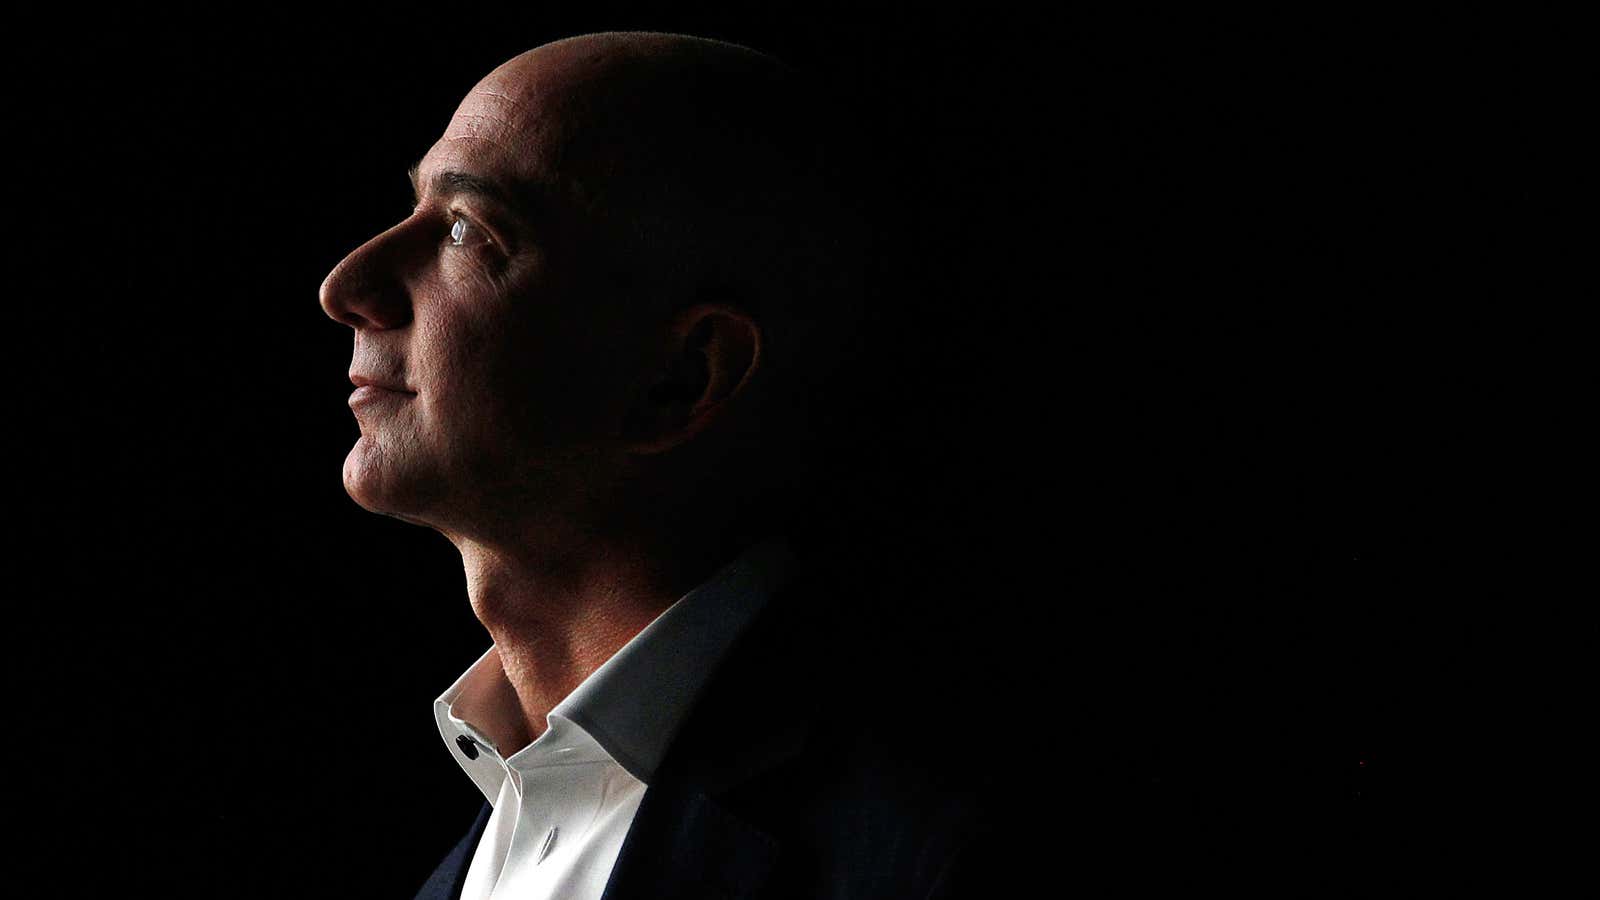 The enigmatic Jeff Bezos, Amazon’s CEO.